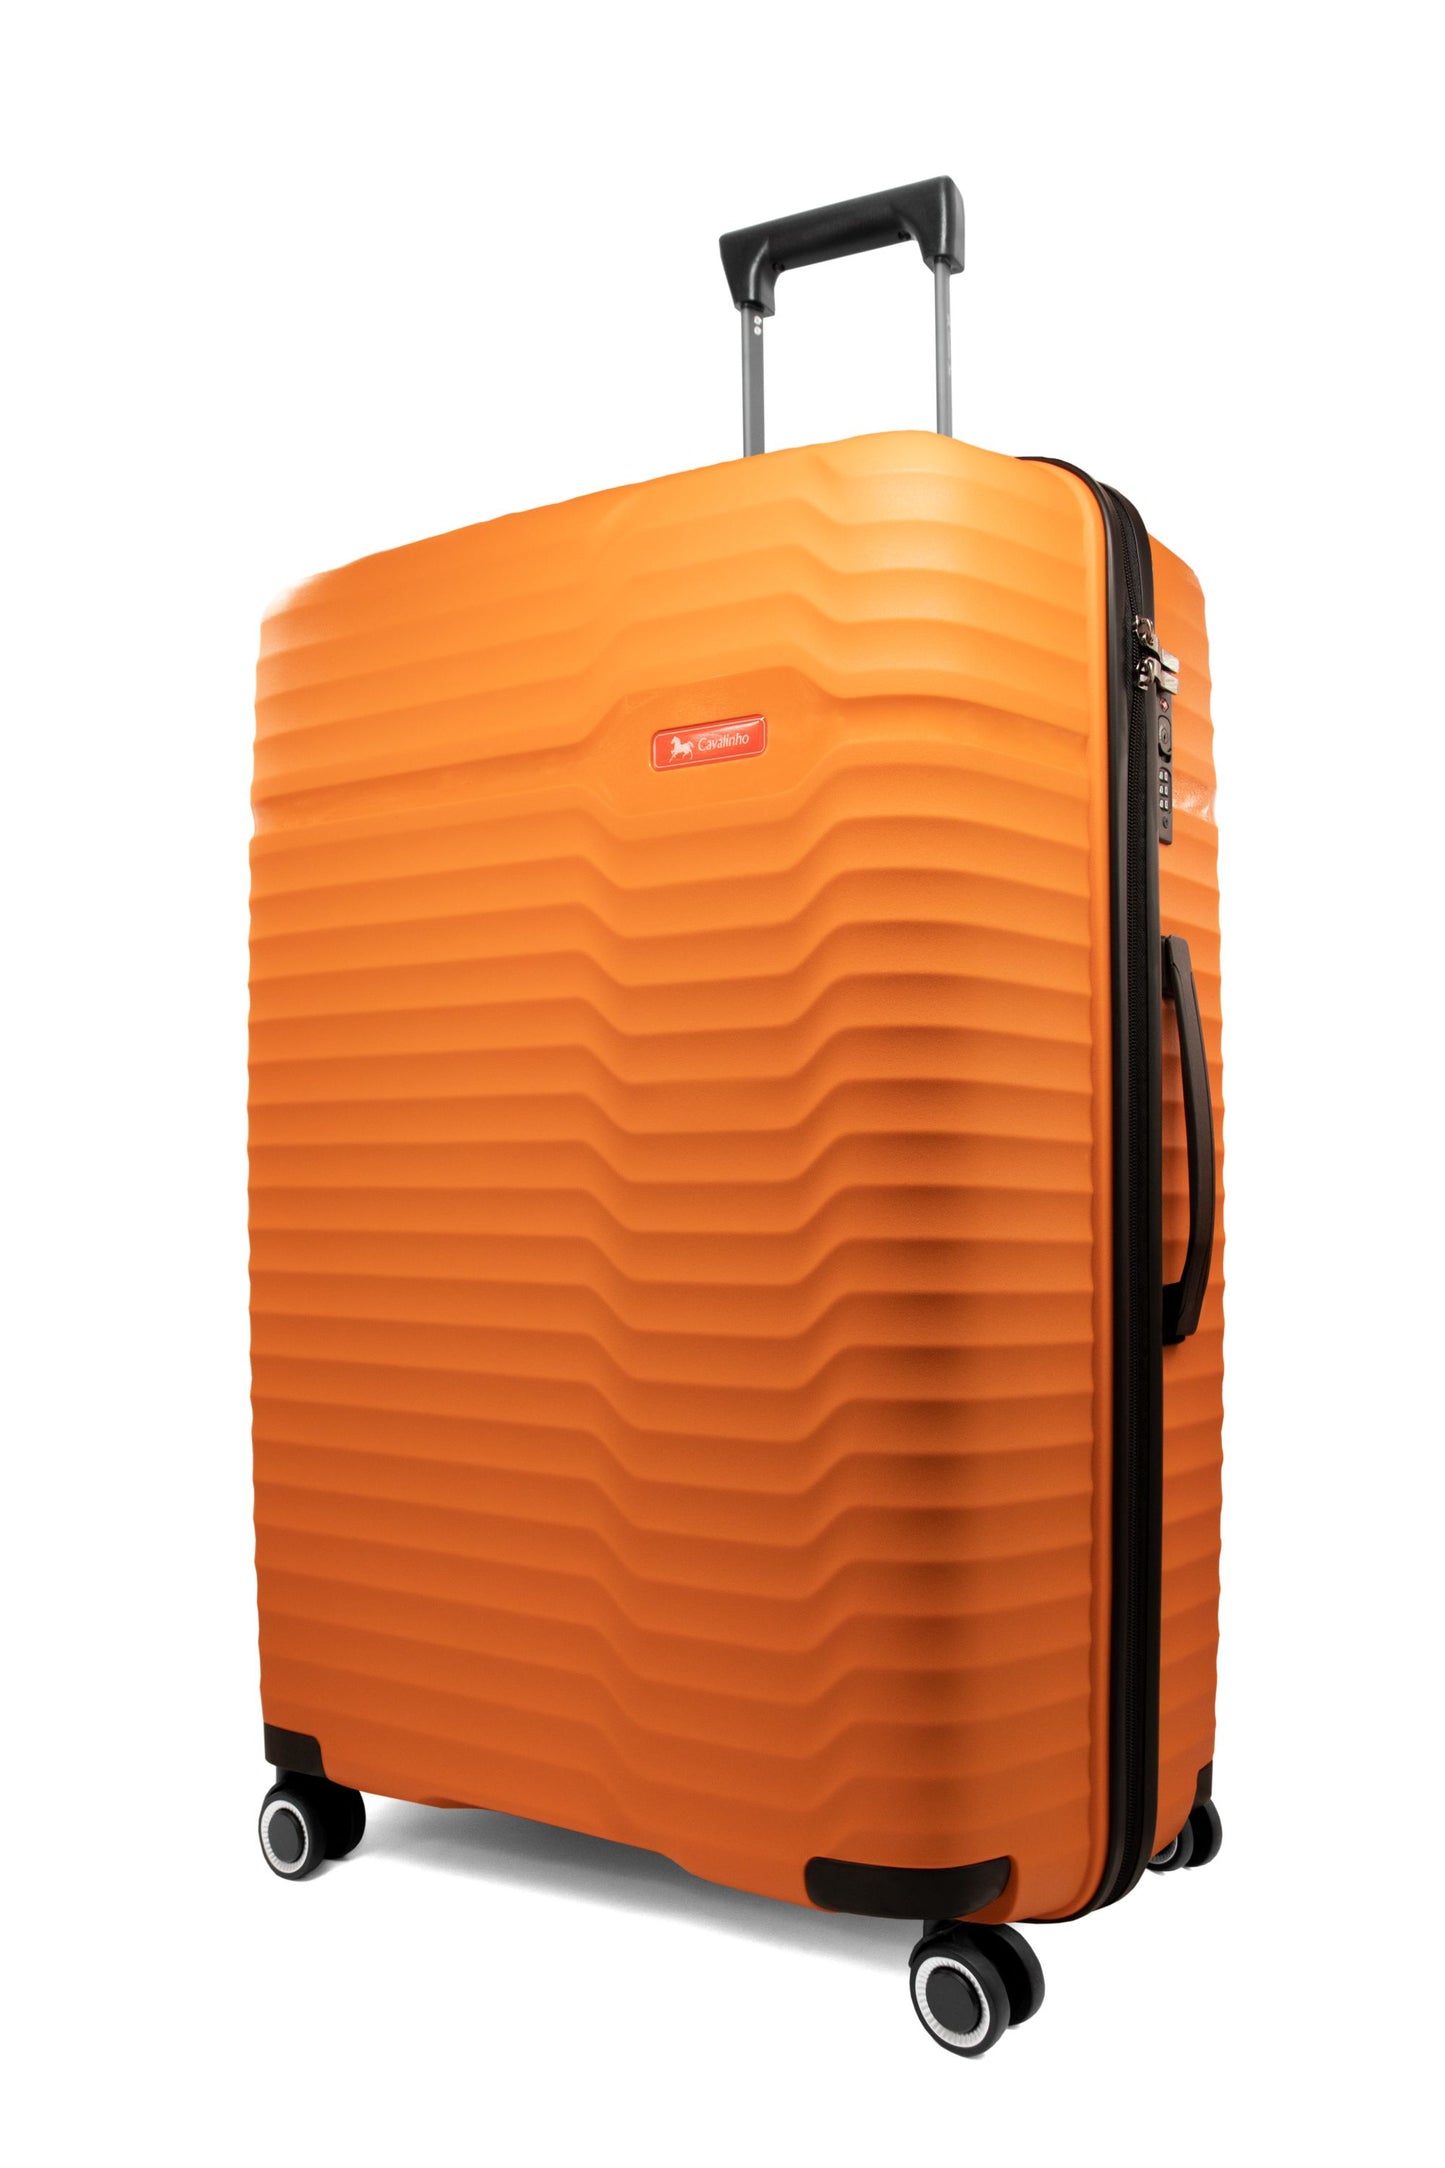 Cavalinho Check-in Hardside Luggage (24" or 28") - 28 inch DarkOrange - 68010003.37.28_2